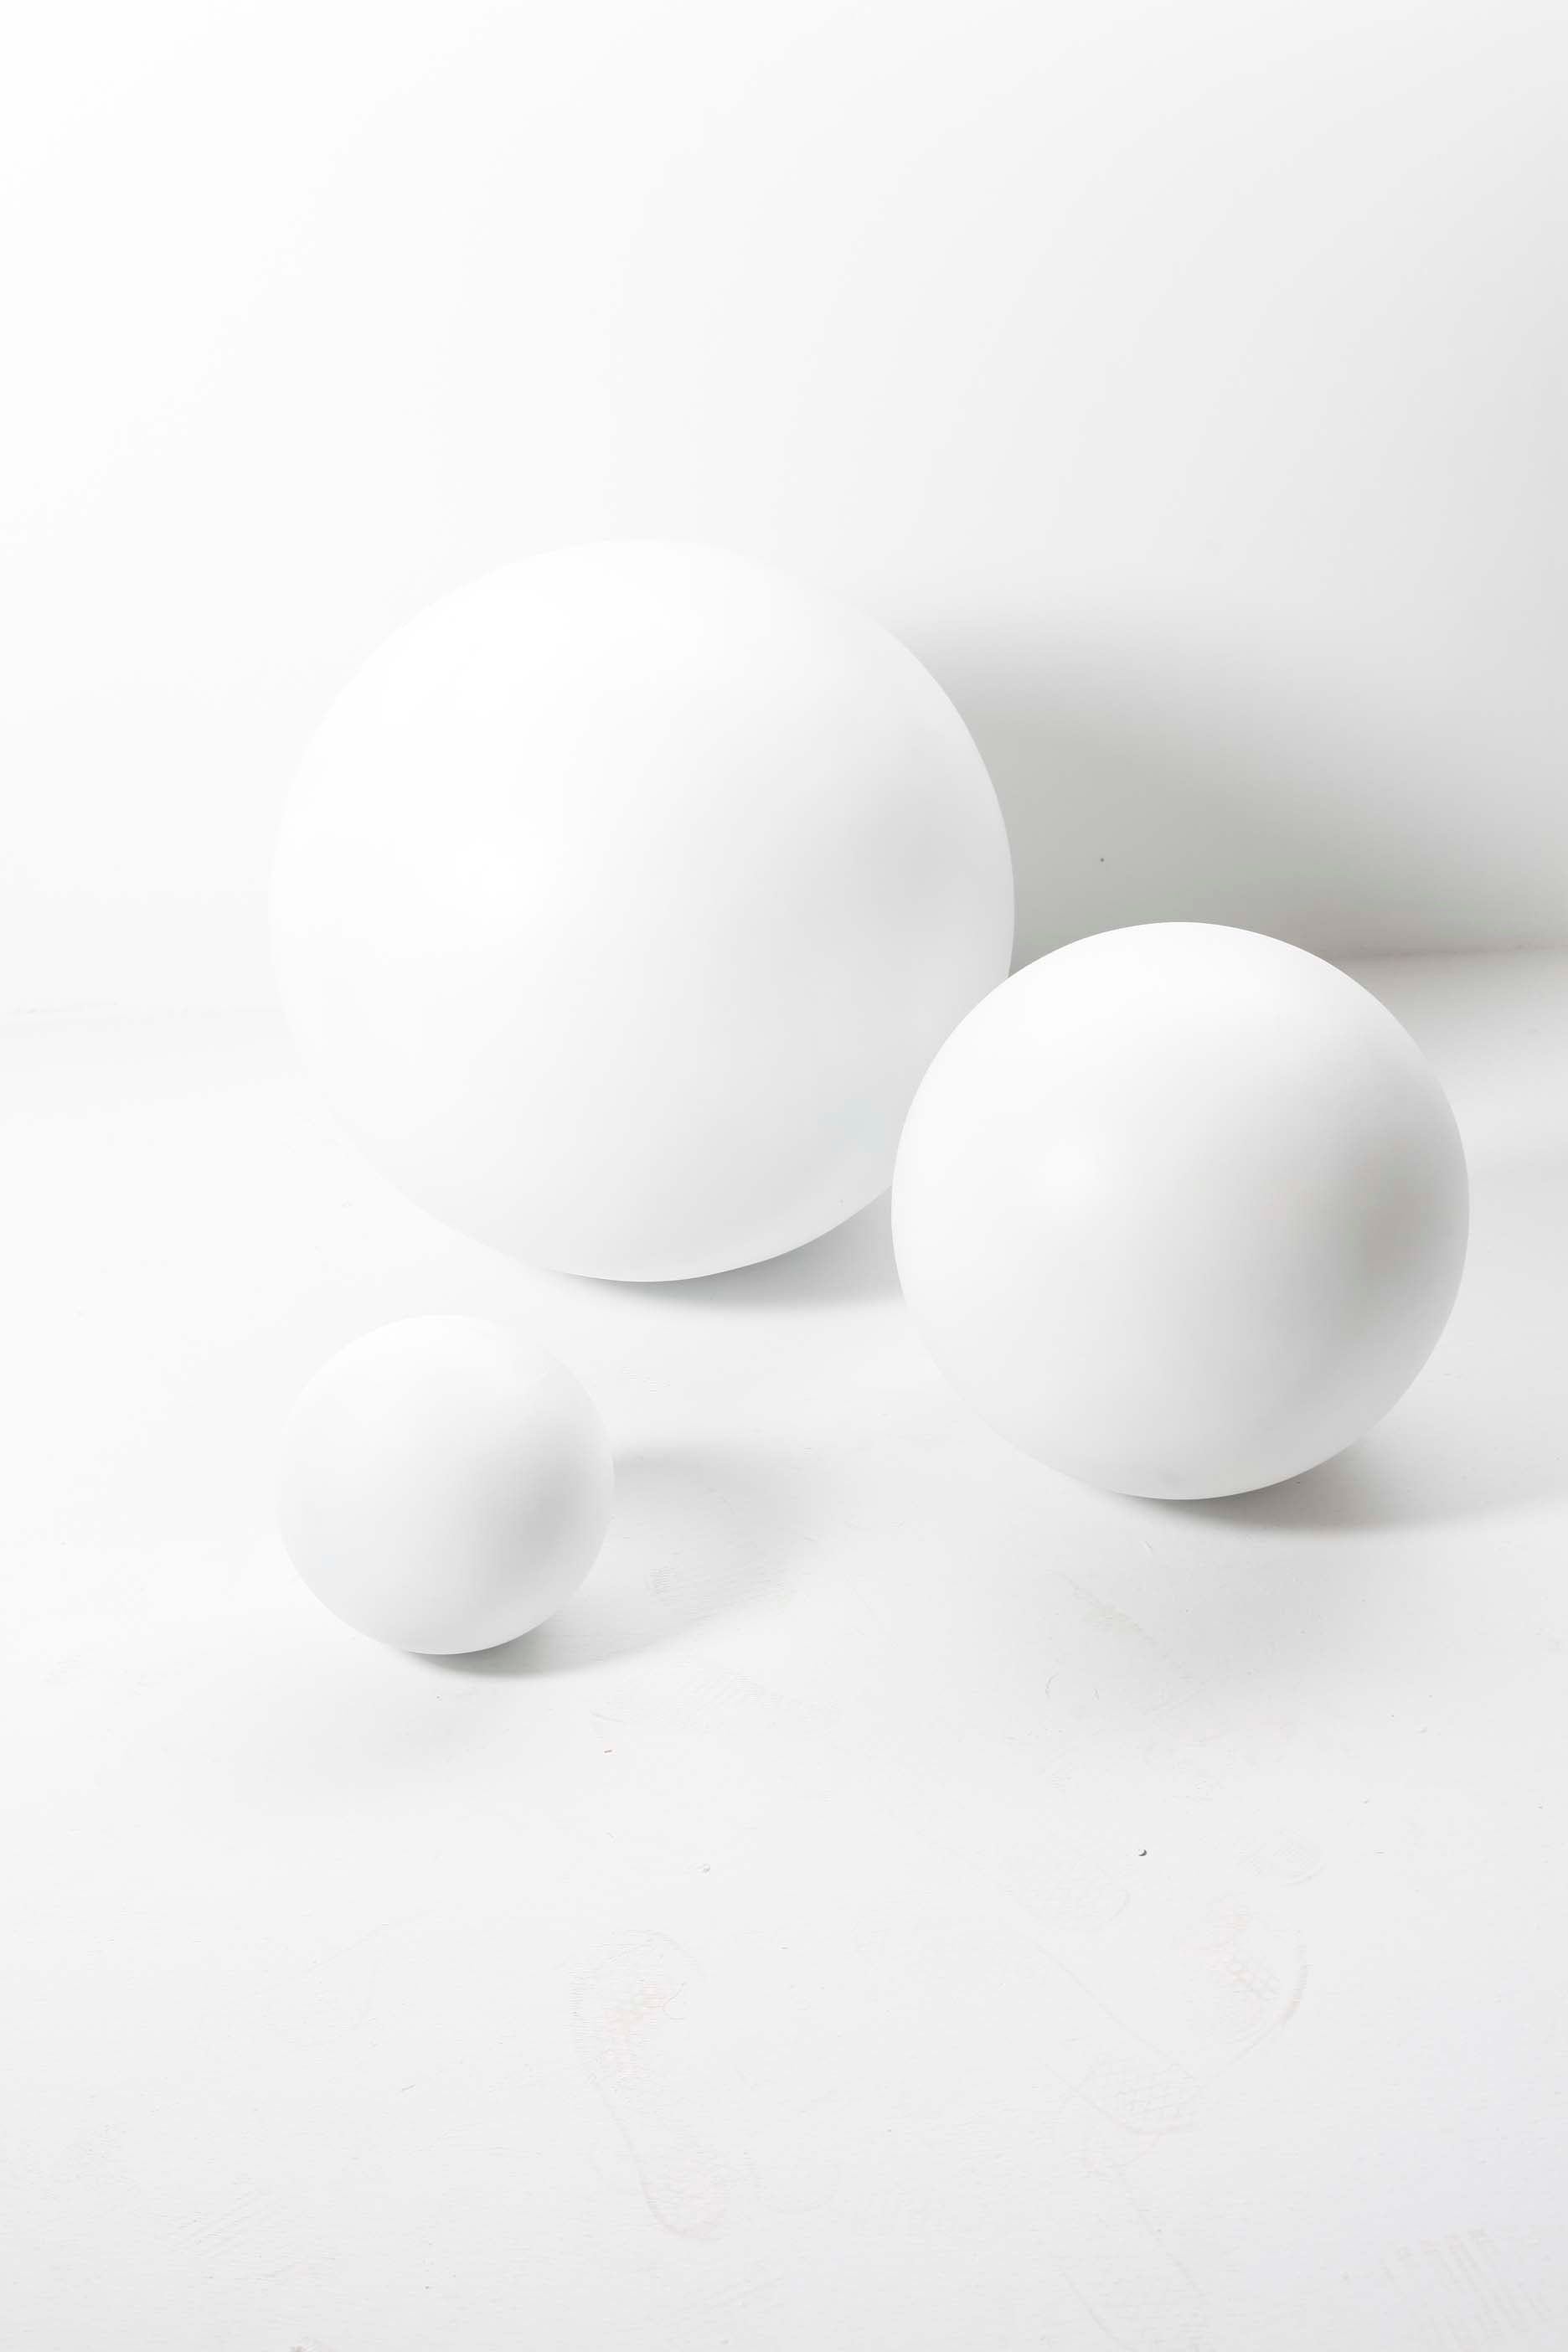 Styro-Foam Resin Balls